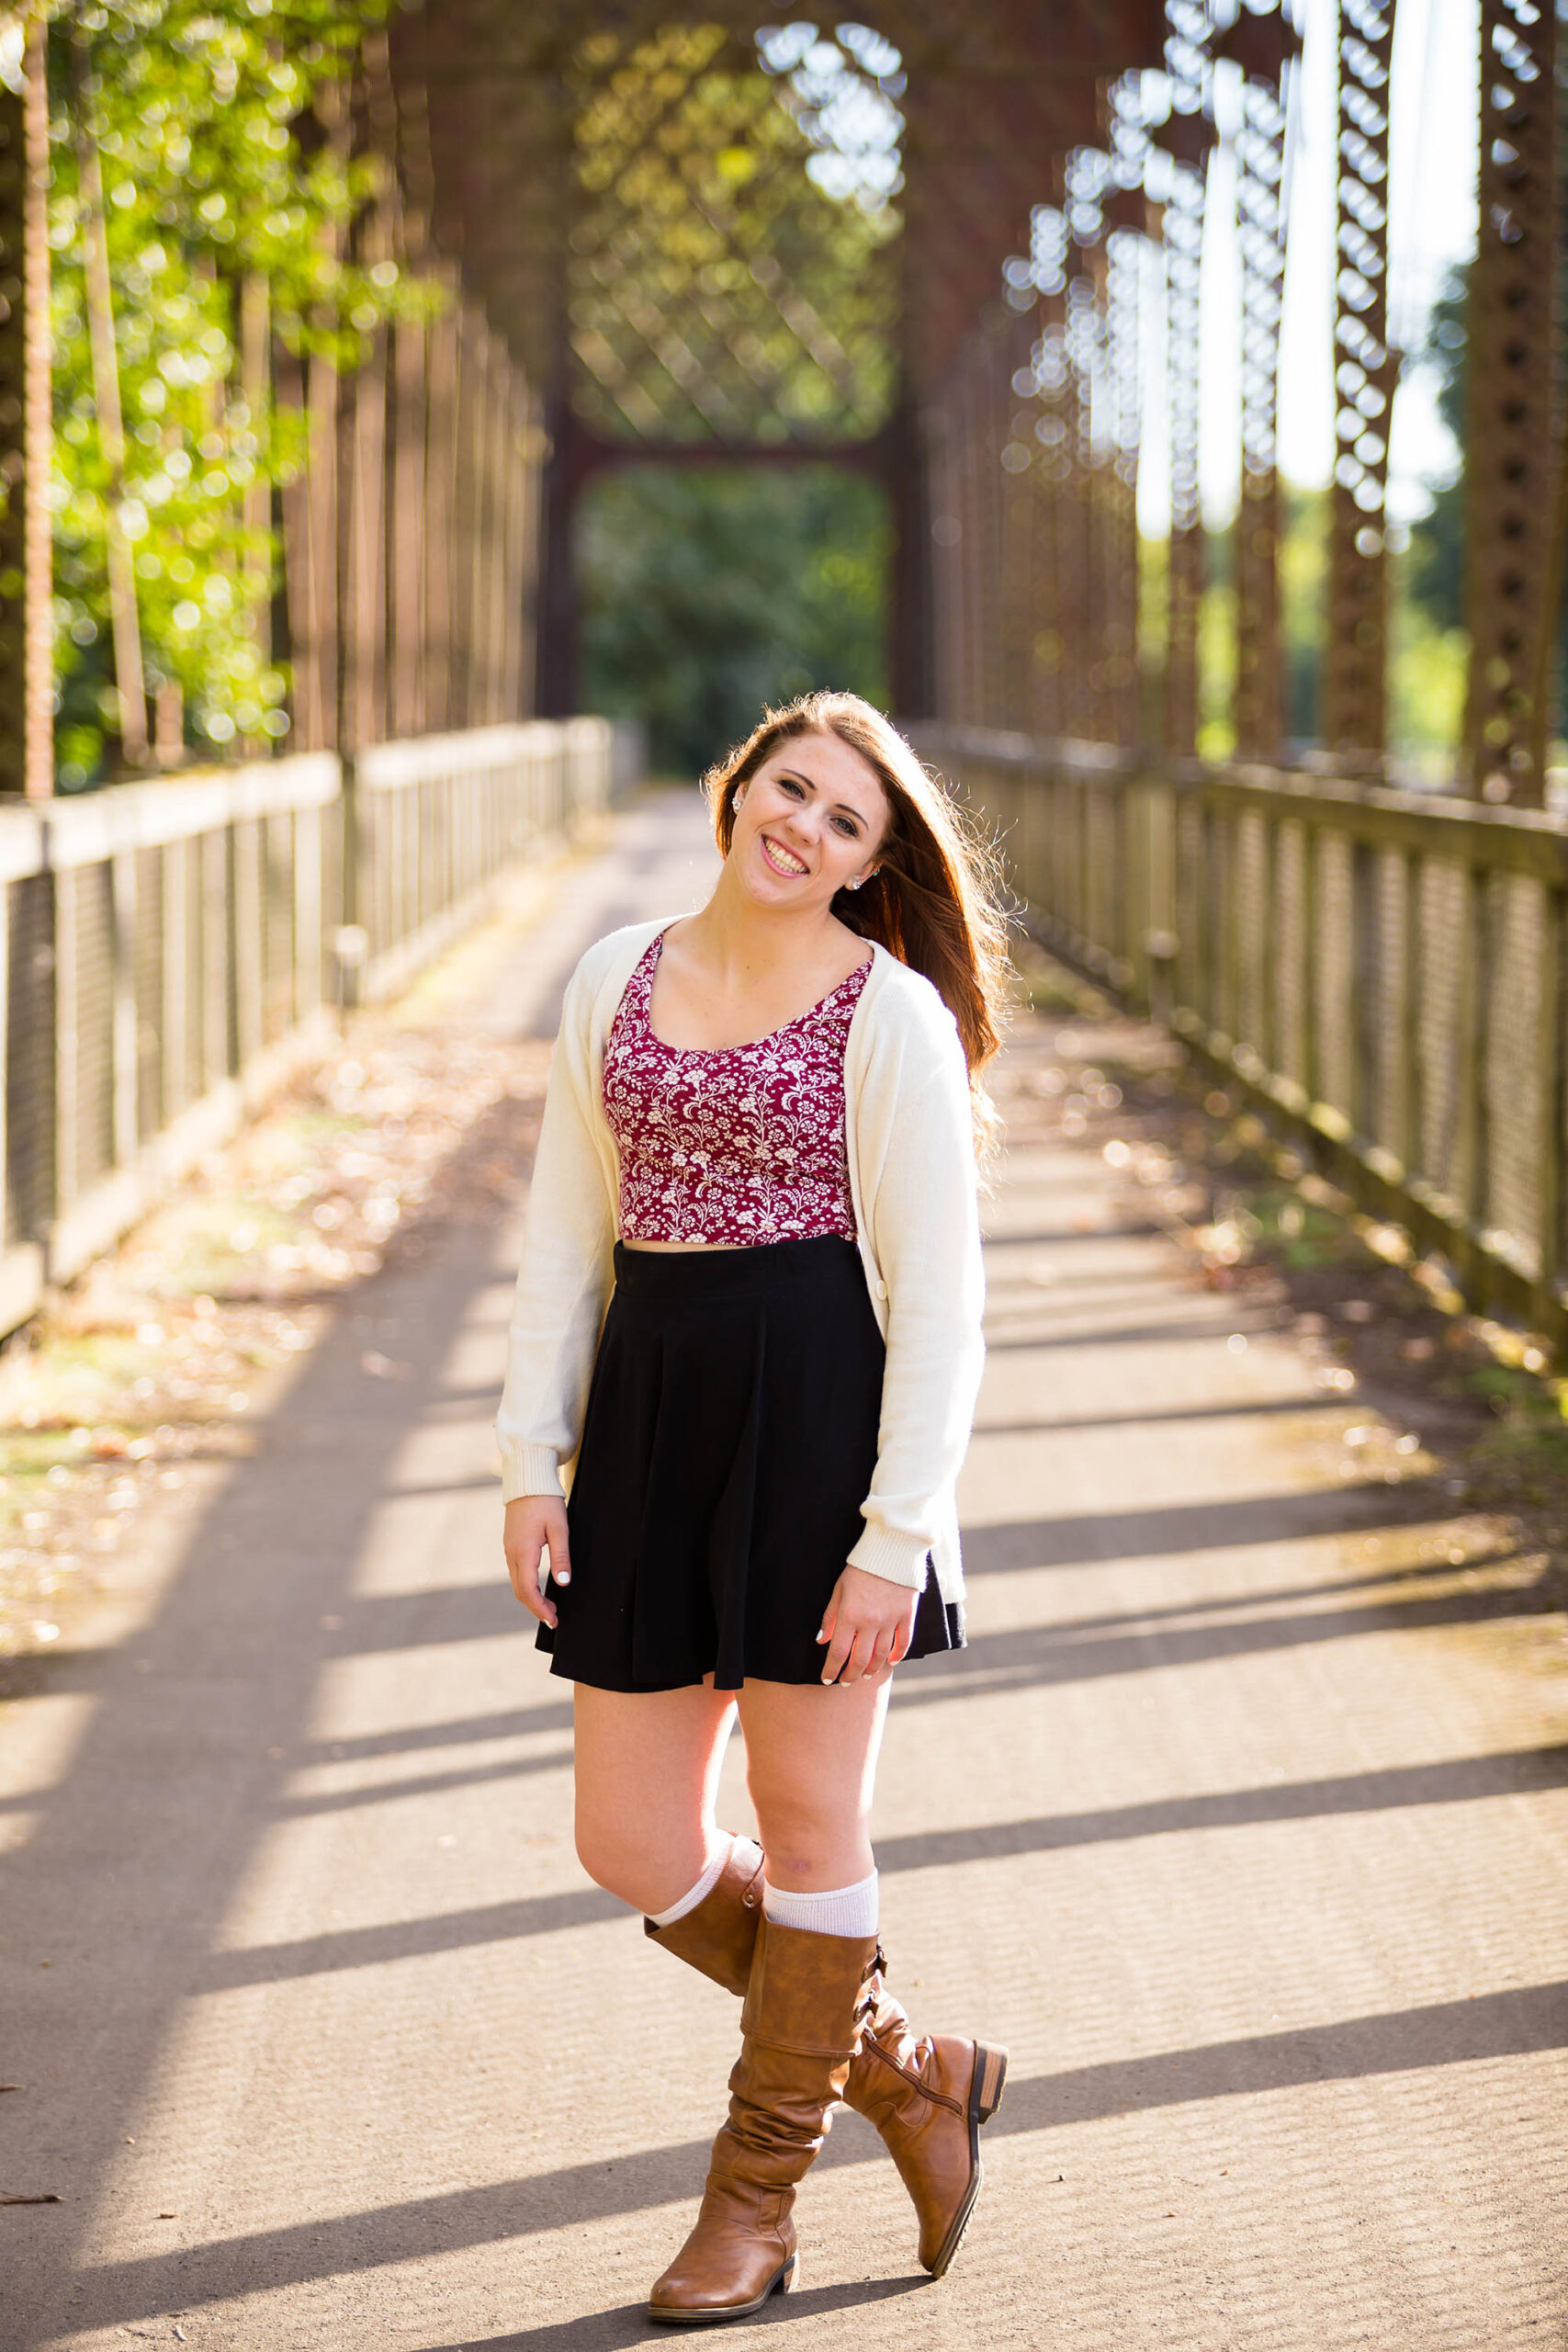 Teen girl poses for a high school senior portrait photo